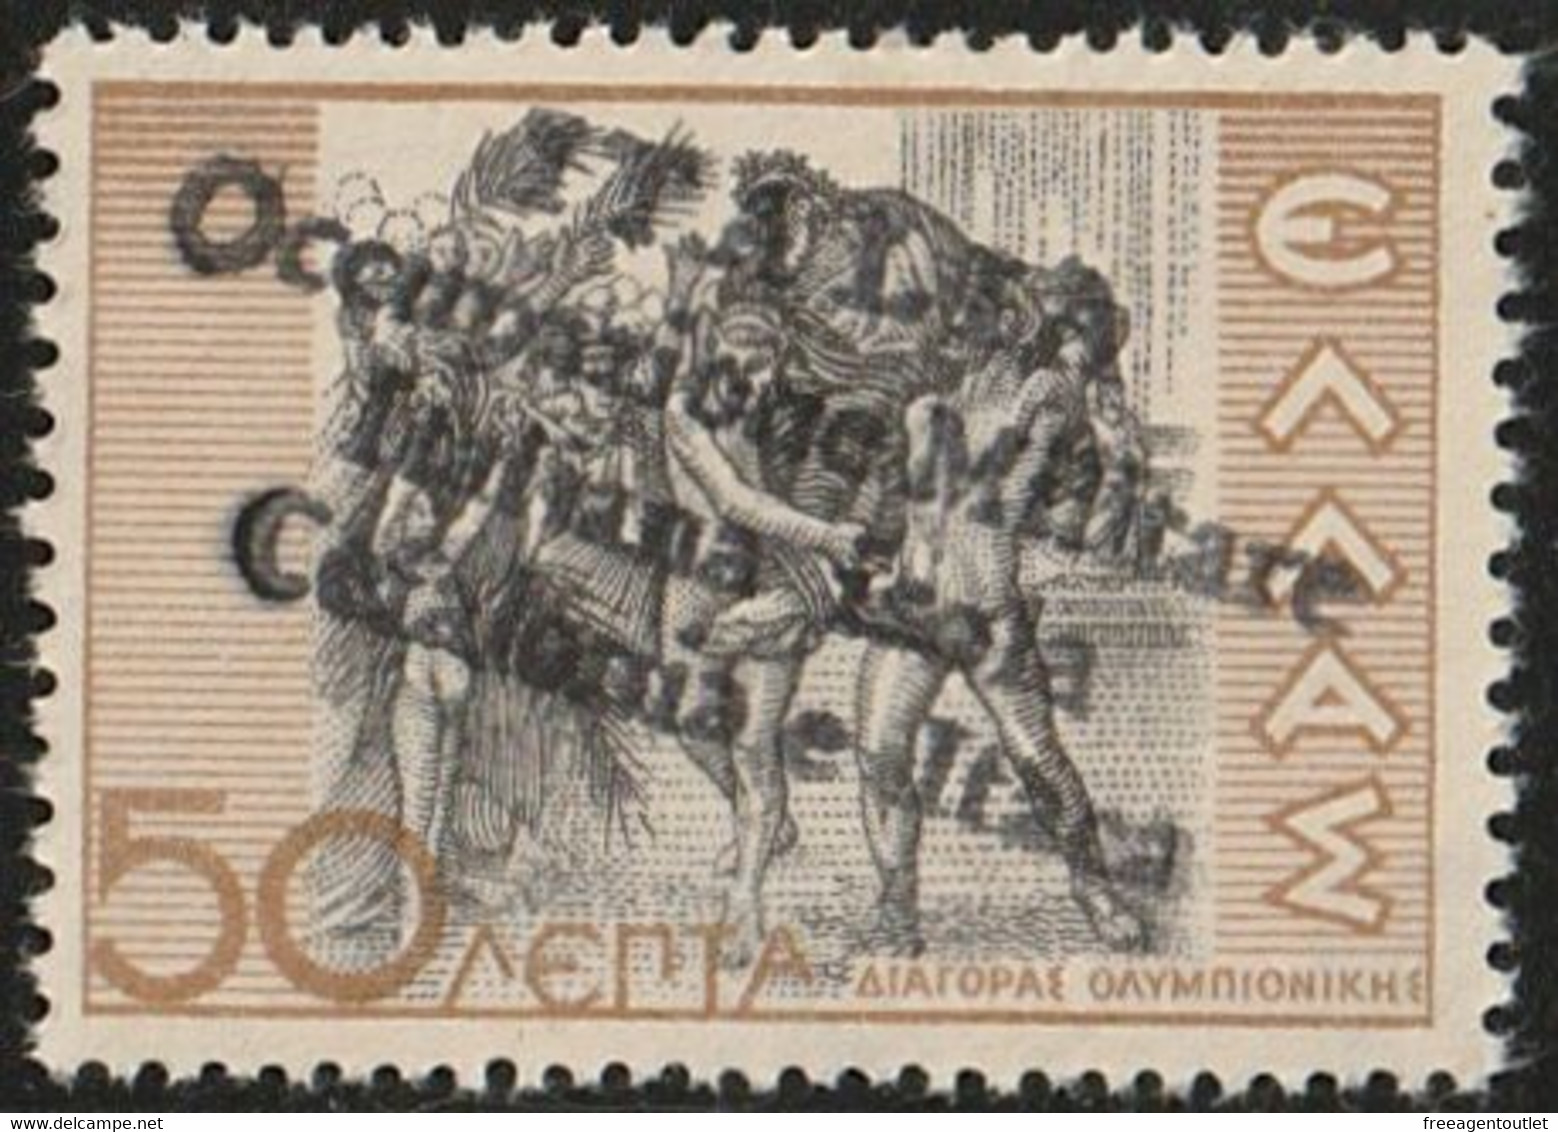 Cefalonia E Itaca - 1941 - 50 L. - MNH** - Hand Overprinted - WW2 - Signed A. Diena - CV 17900€ / Italian Occupation - Cefalonia & Itaca